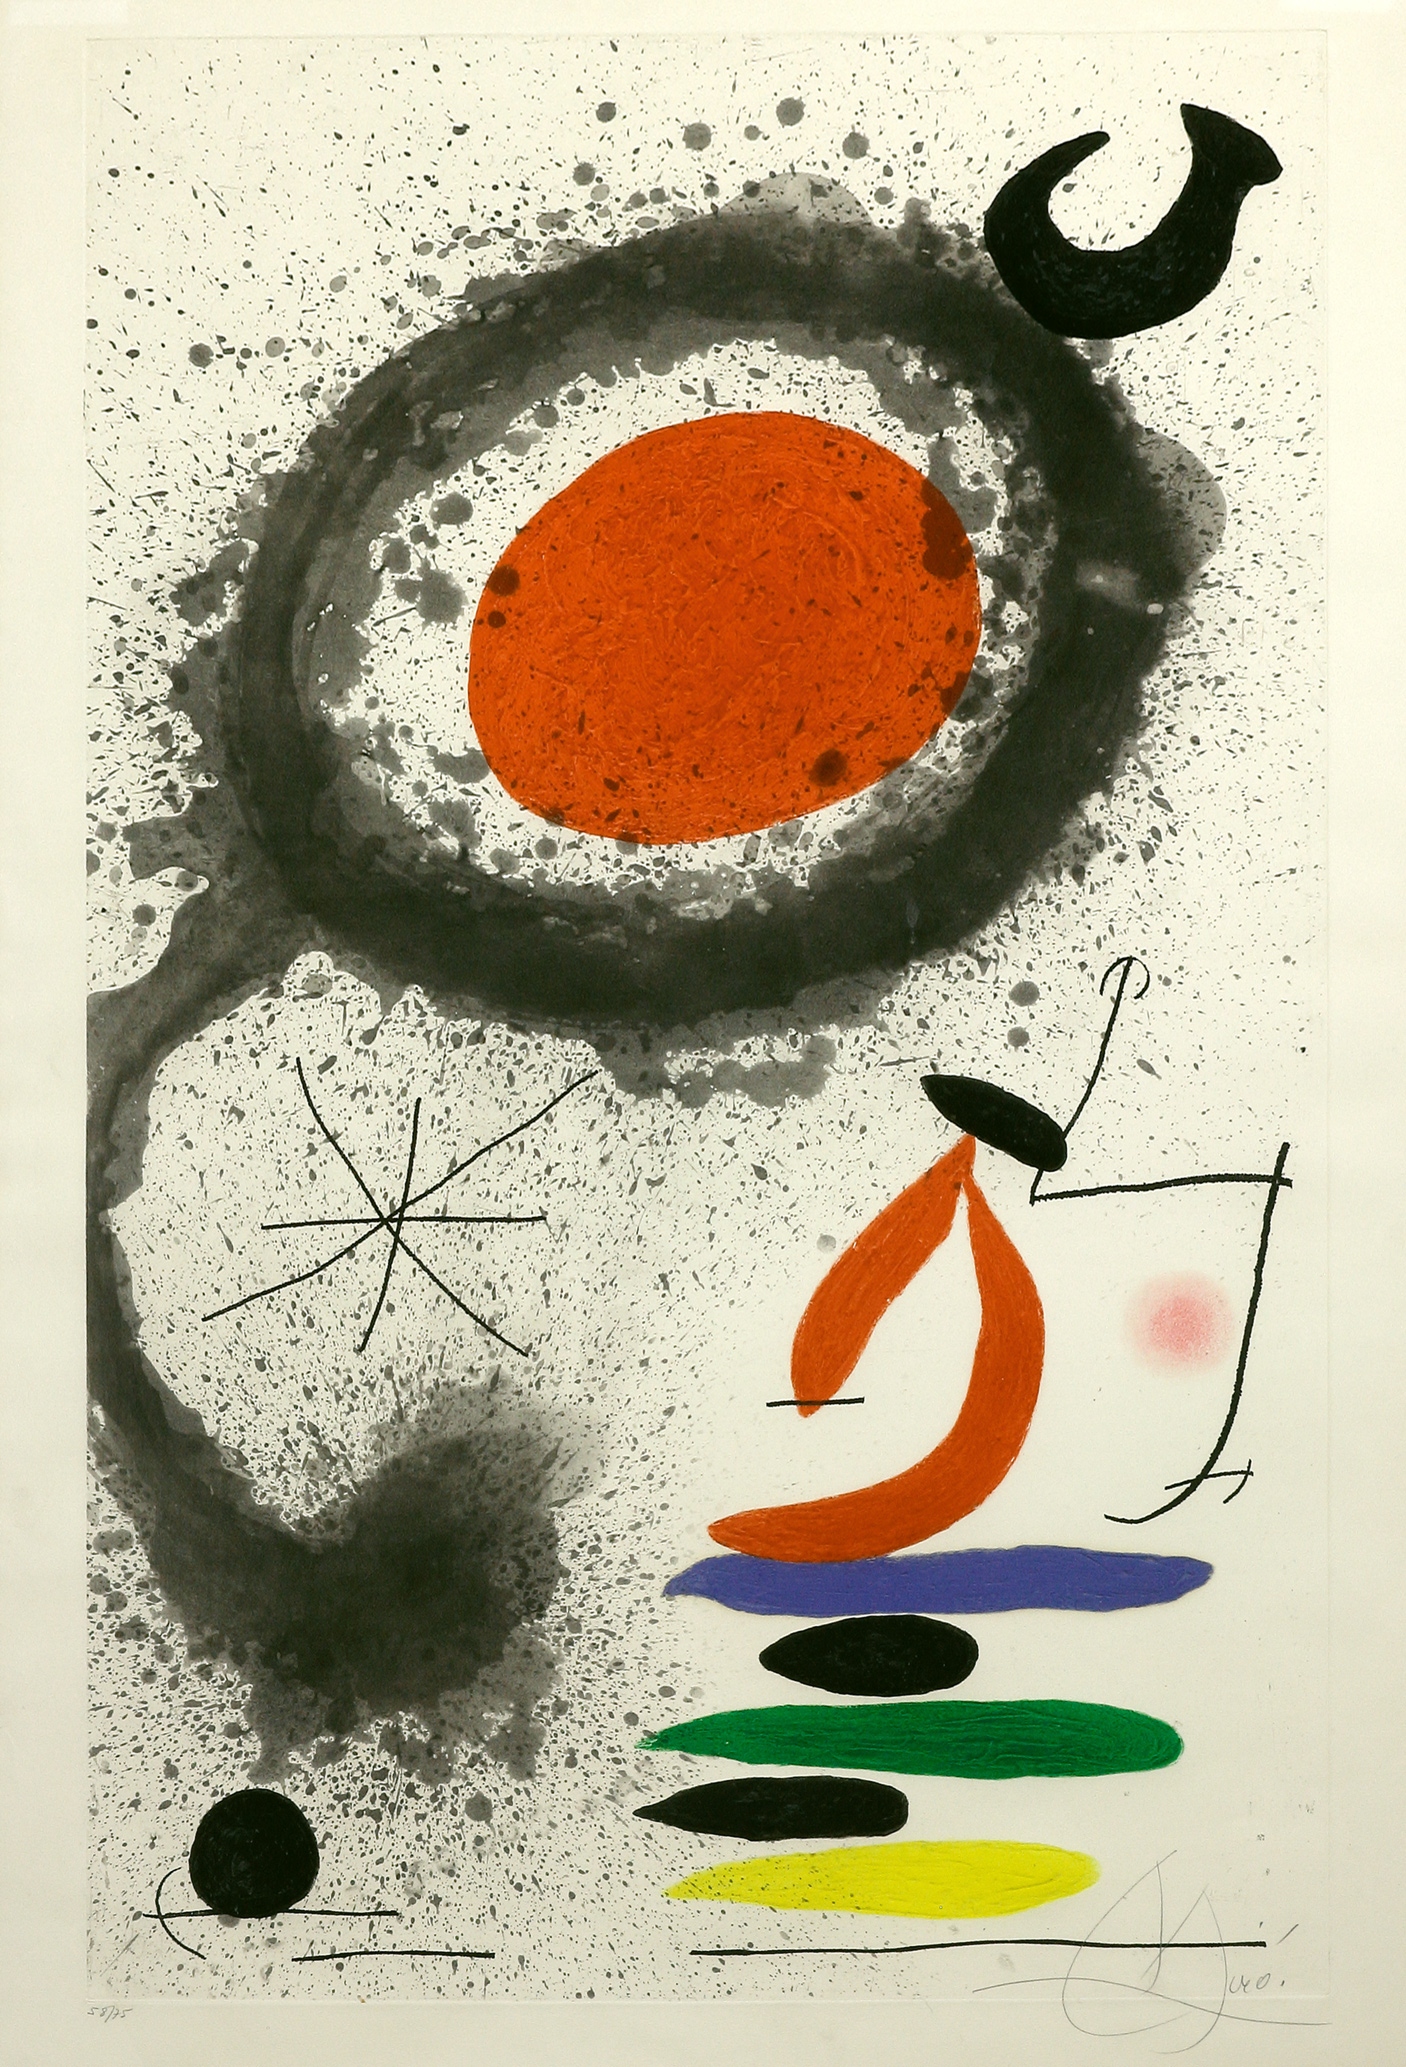 Miró, Joan (1893 Barcelona - 1983 Palma) Le soleil ébouillanté. 1969. Farbaquatintaradierung